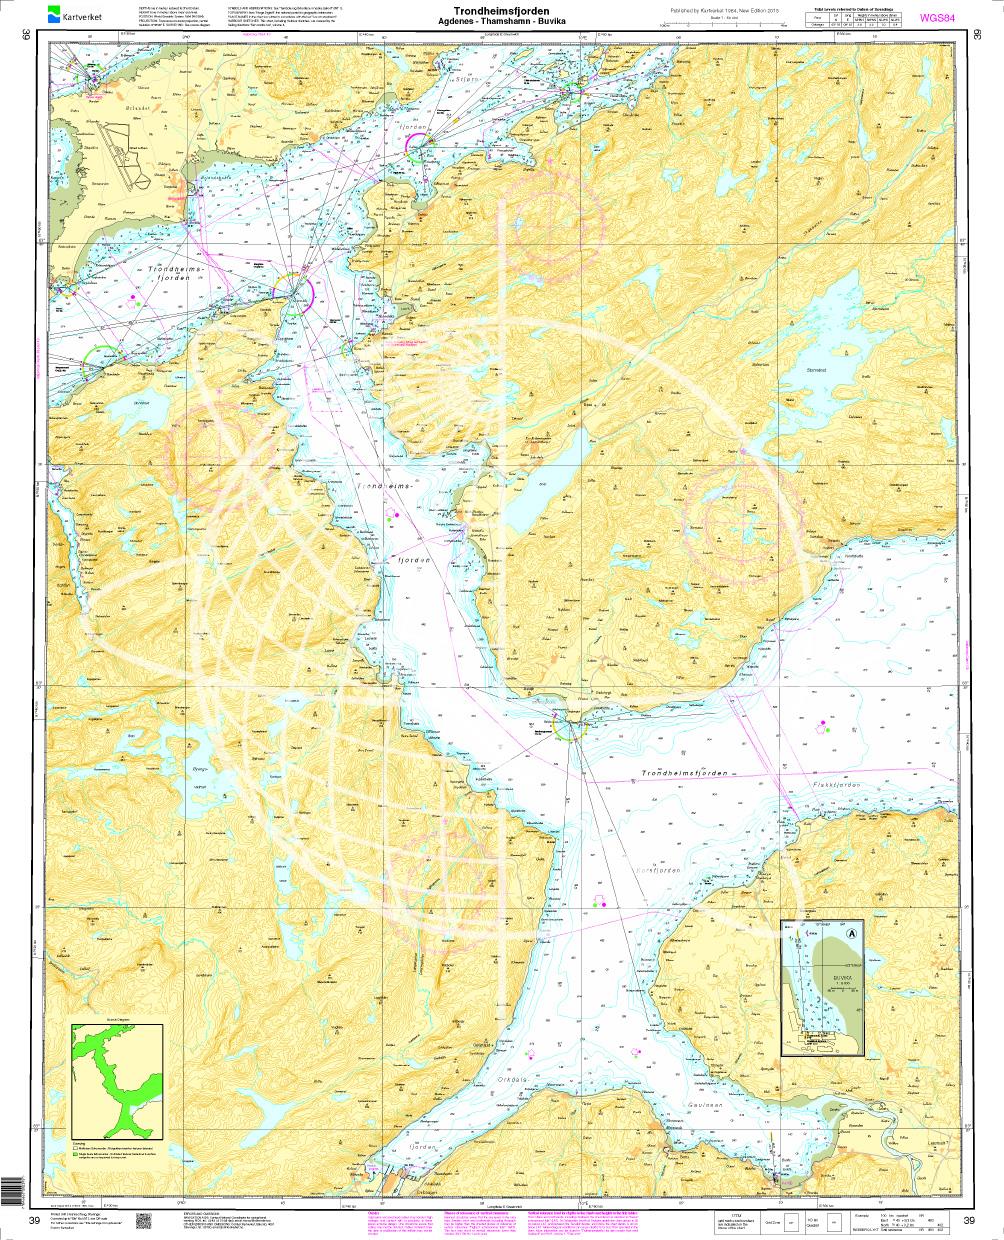 Norwegen N 39 Atlantik, Trondheimsfjord mit  Agdenes - Thamshamn - Buvika